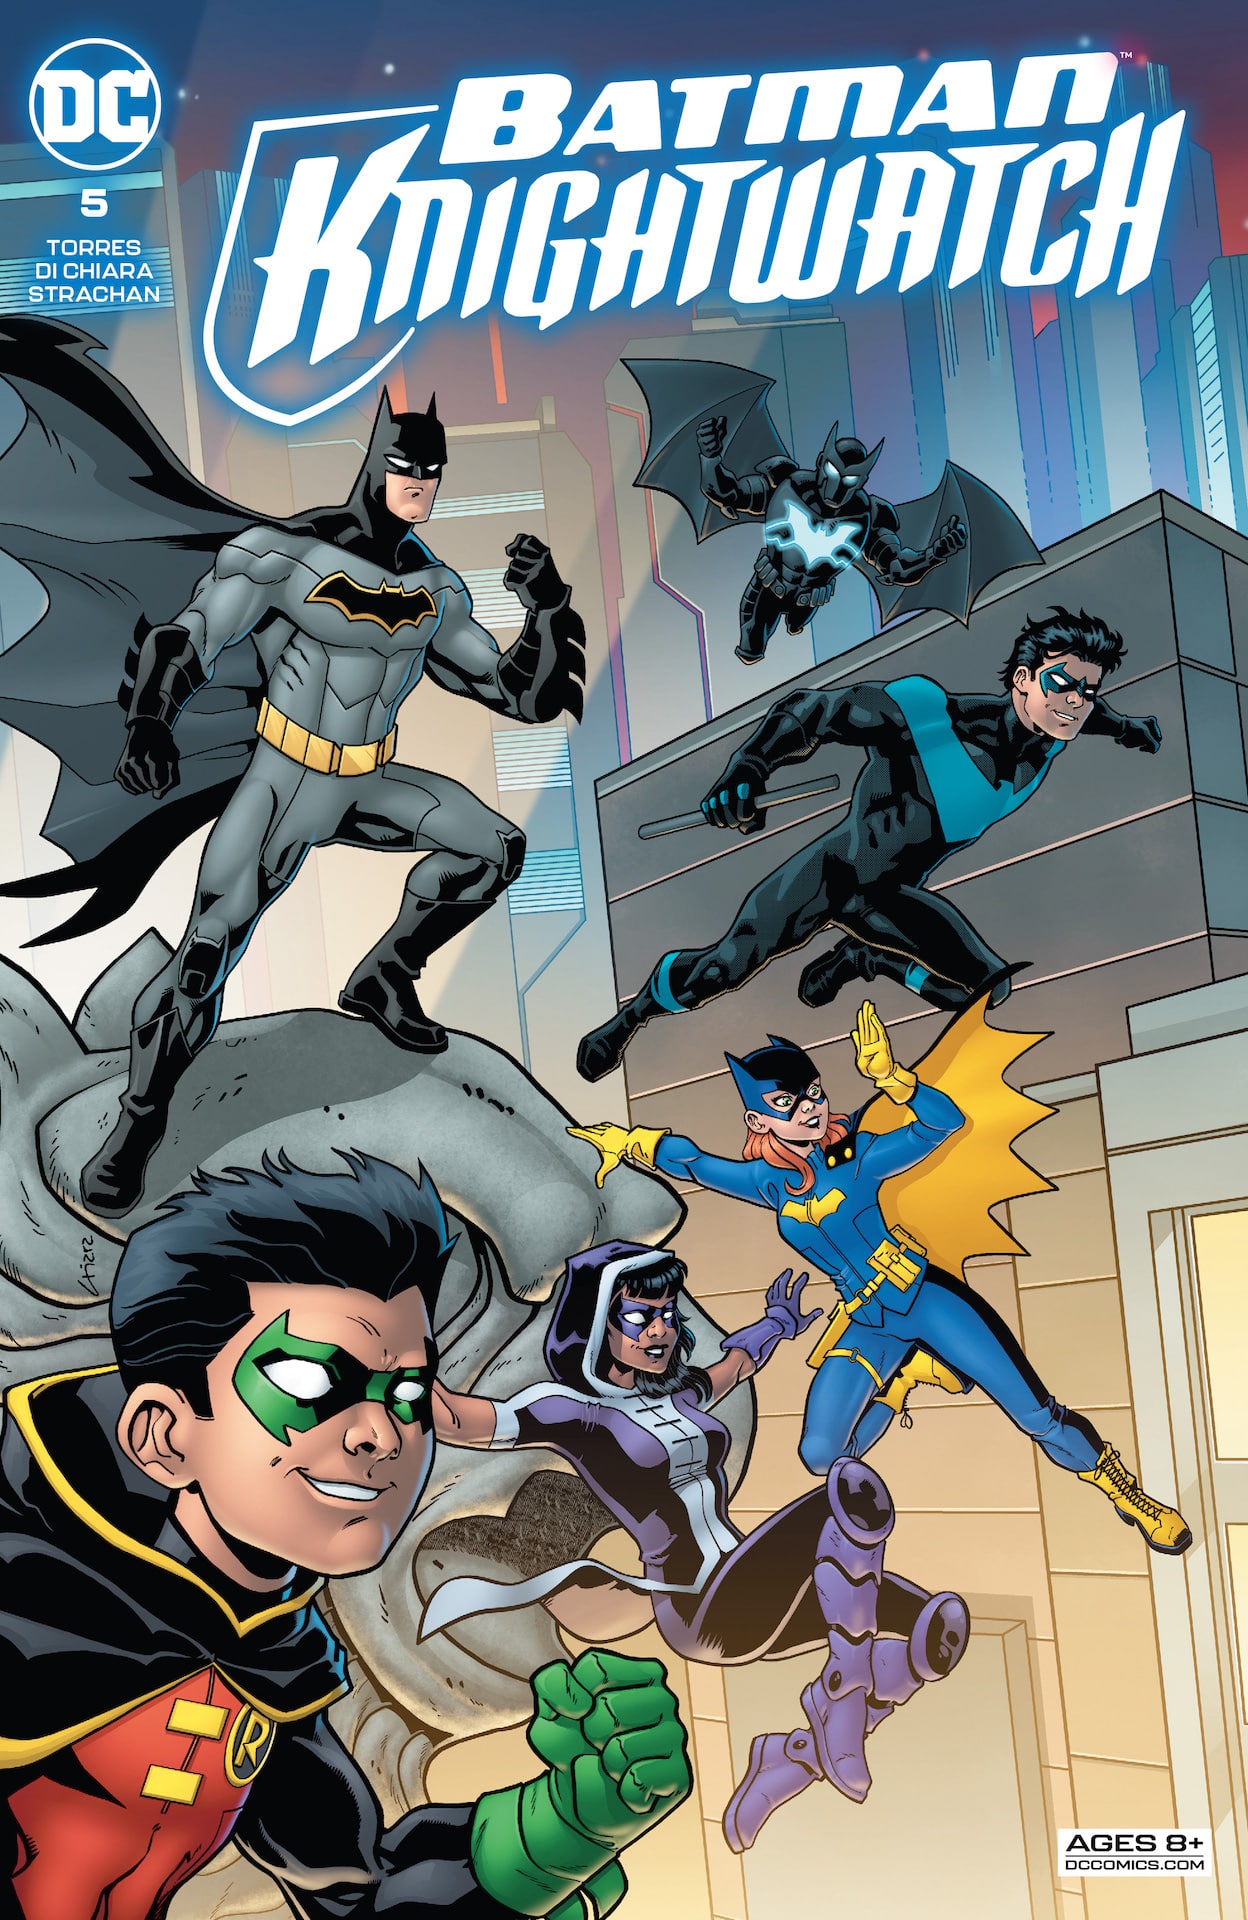 DC Preview: Batman: Knightwatch #5